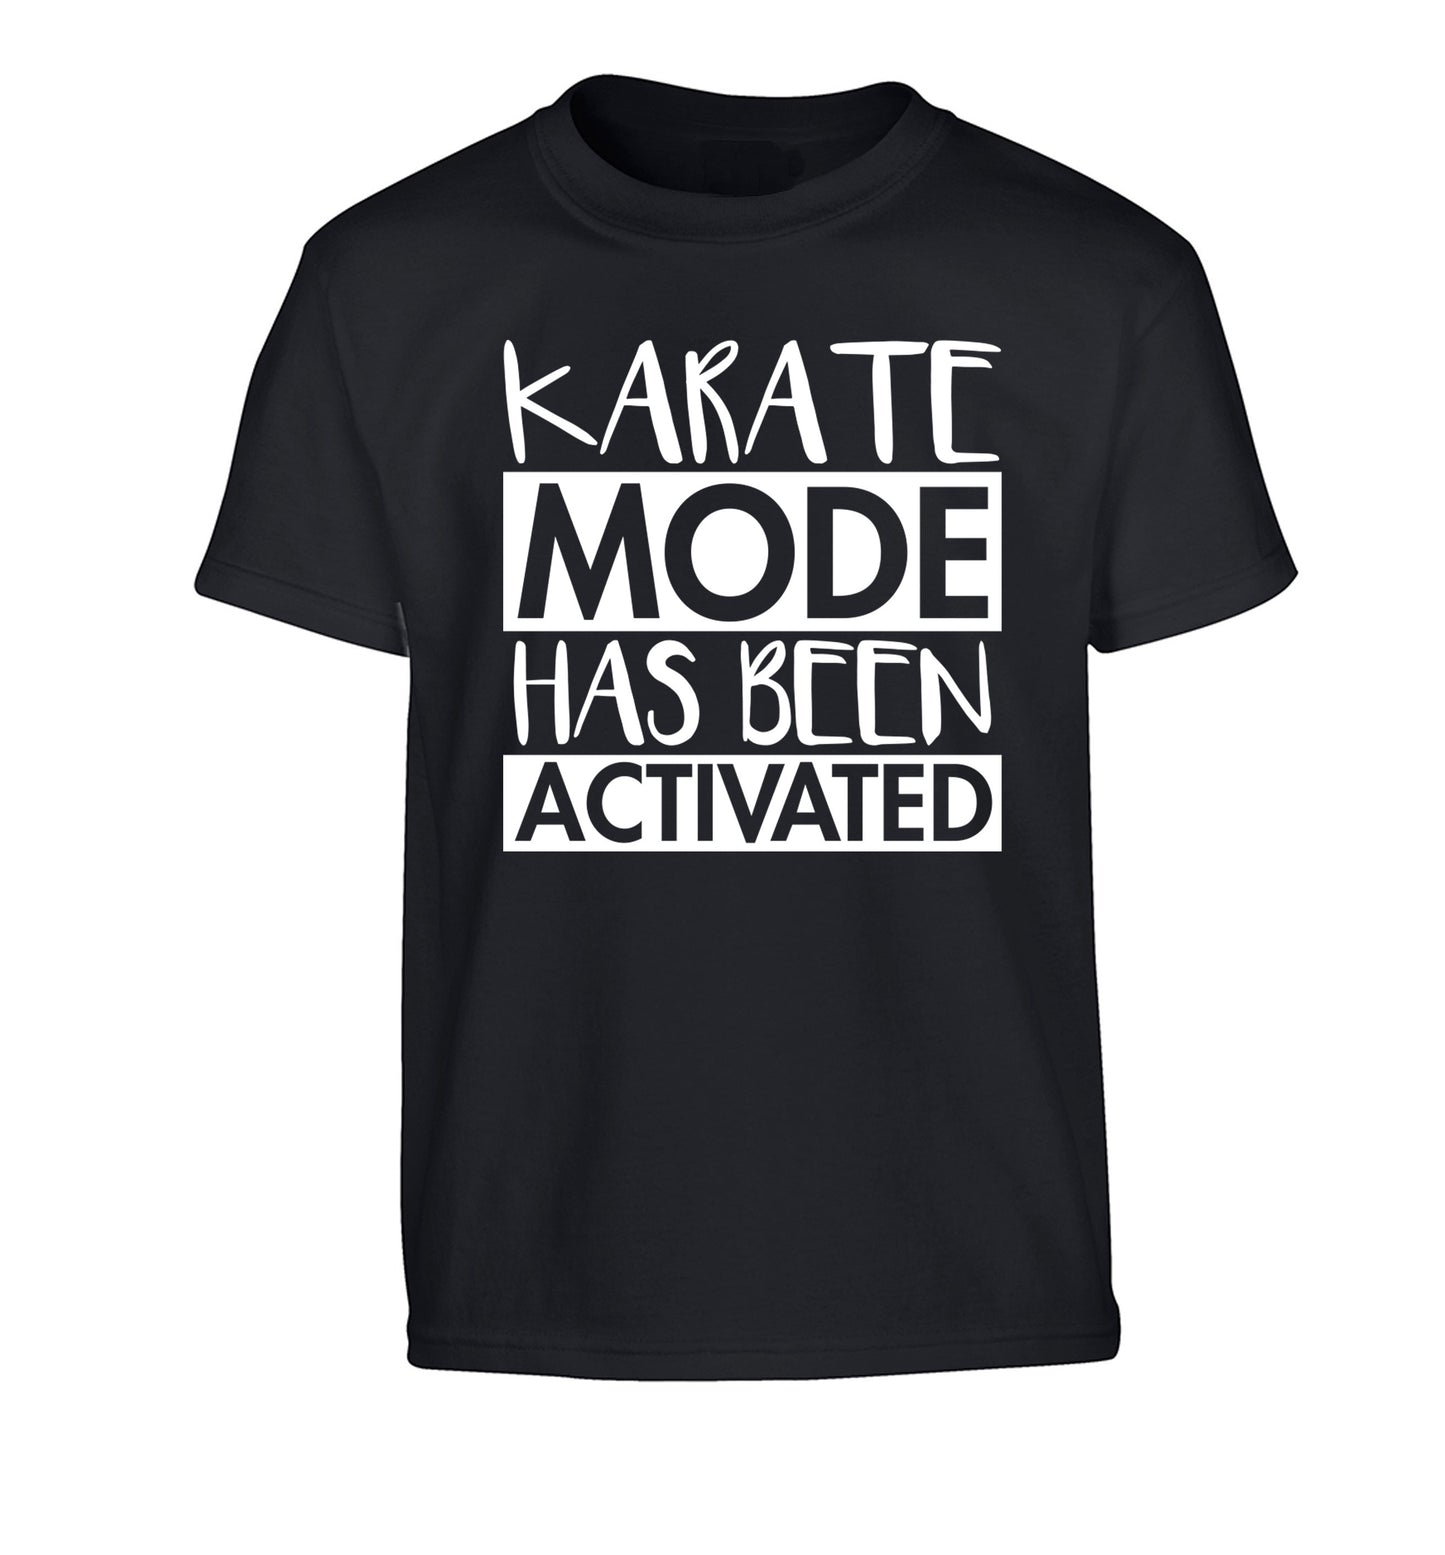 Karate mode activated Children's black Tshirt 12-14 Years